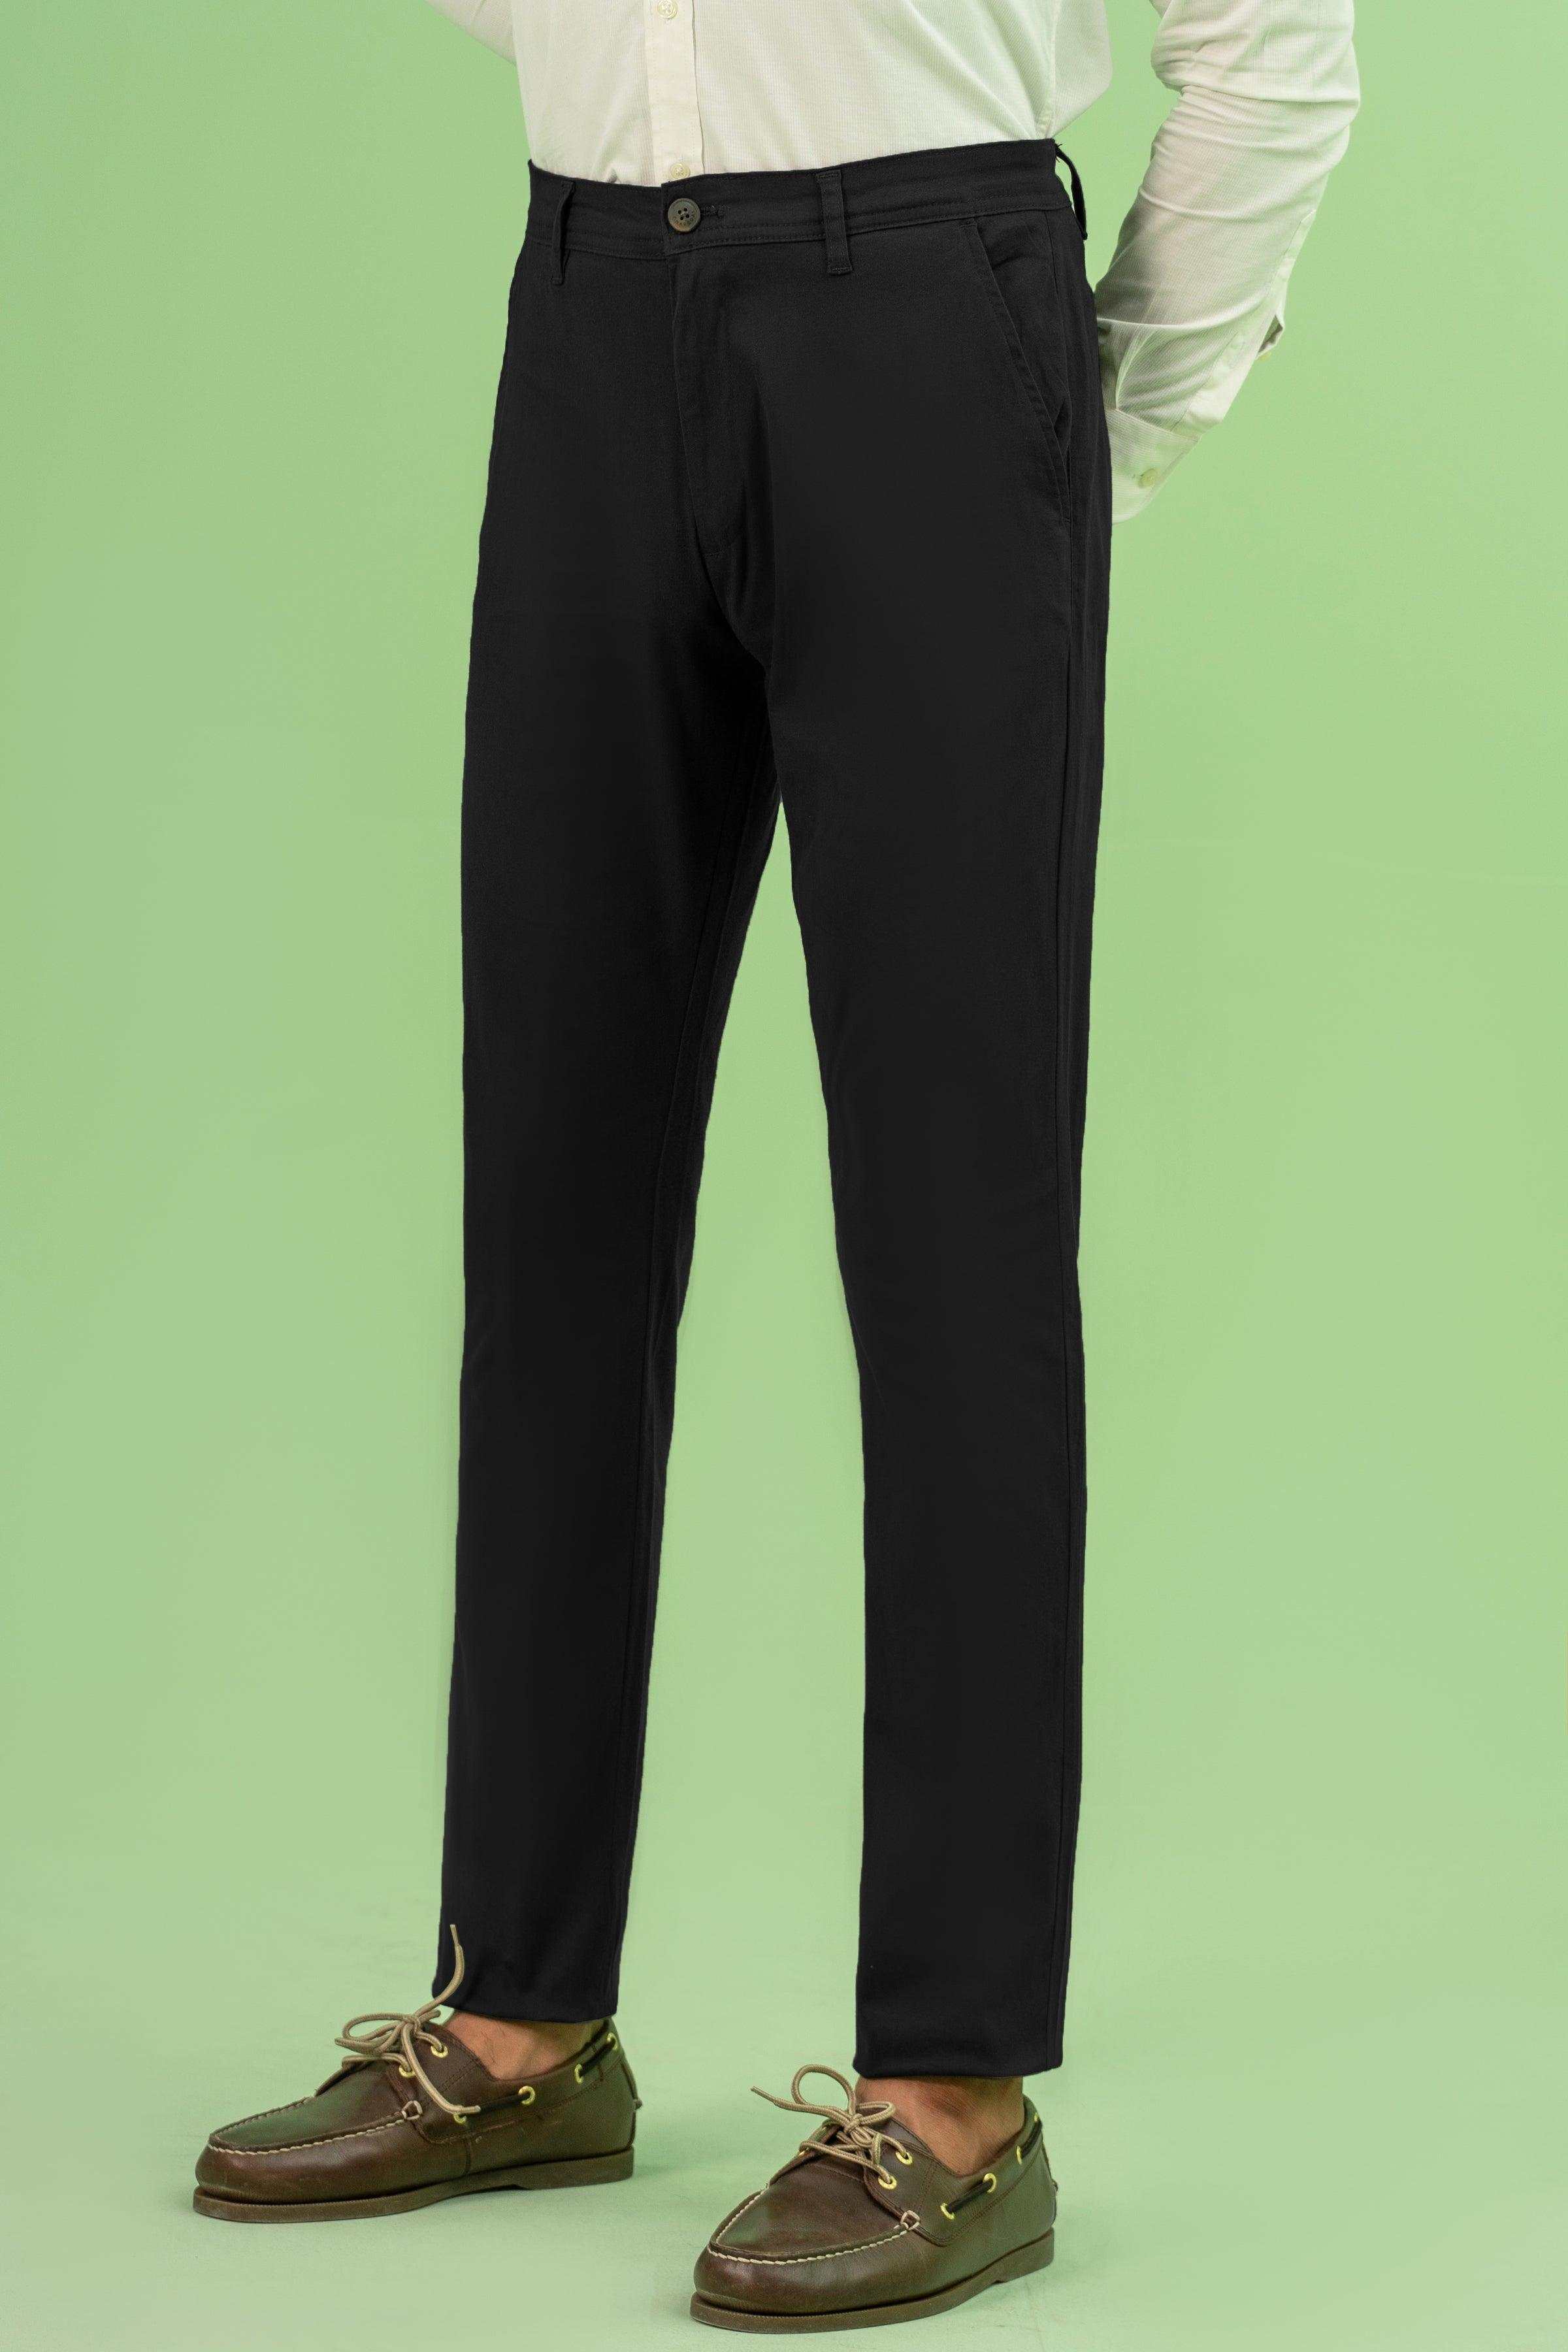 CROSS POCKET SATAIN SLIM FIT PANT BLACK at Charcoal Clothing